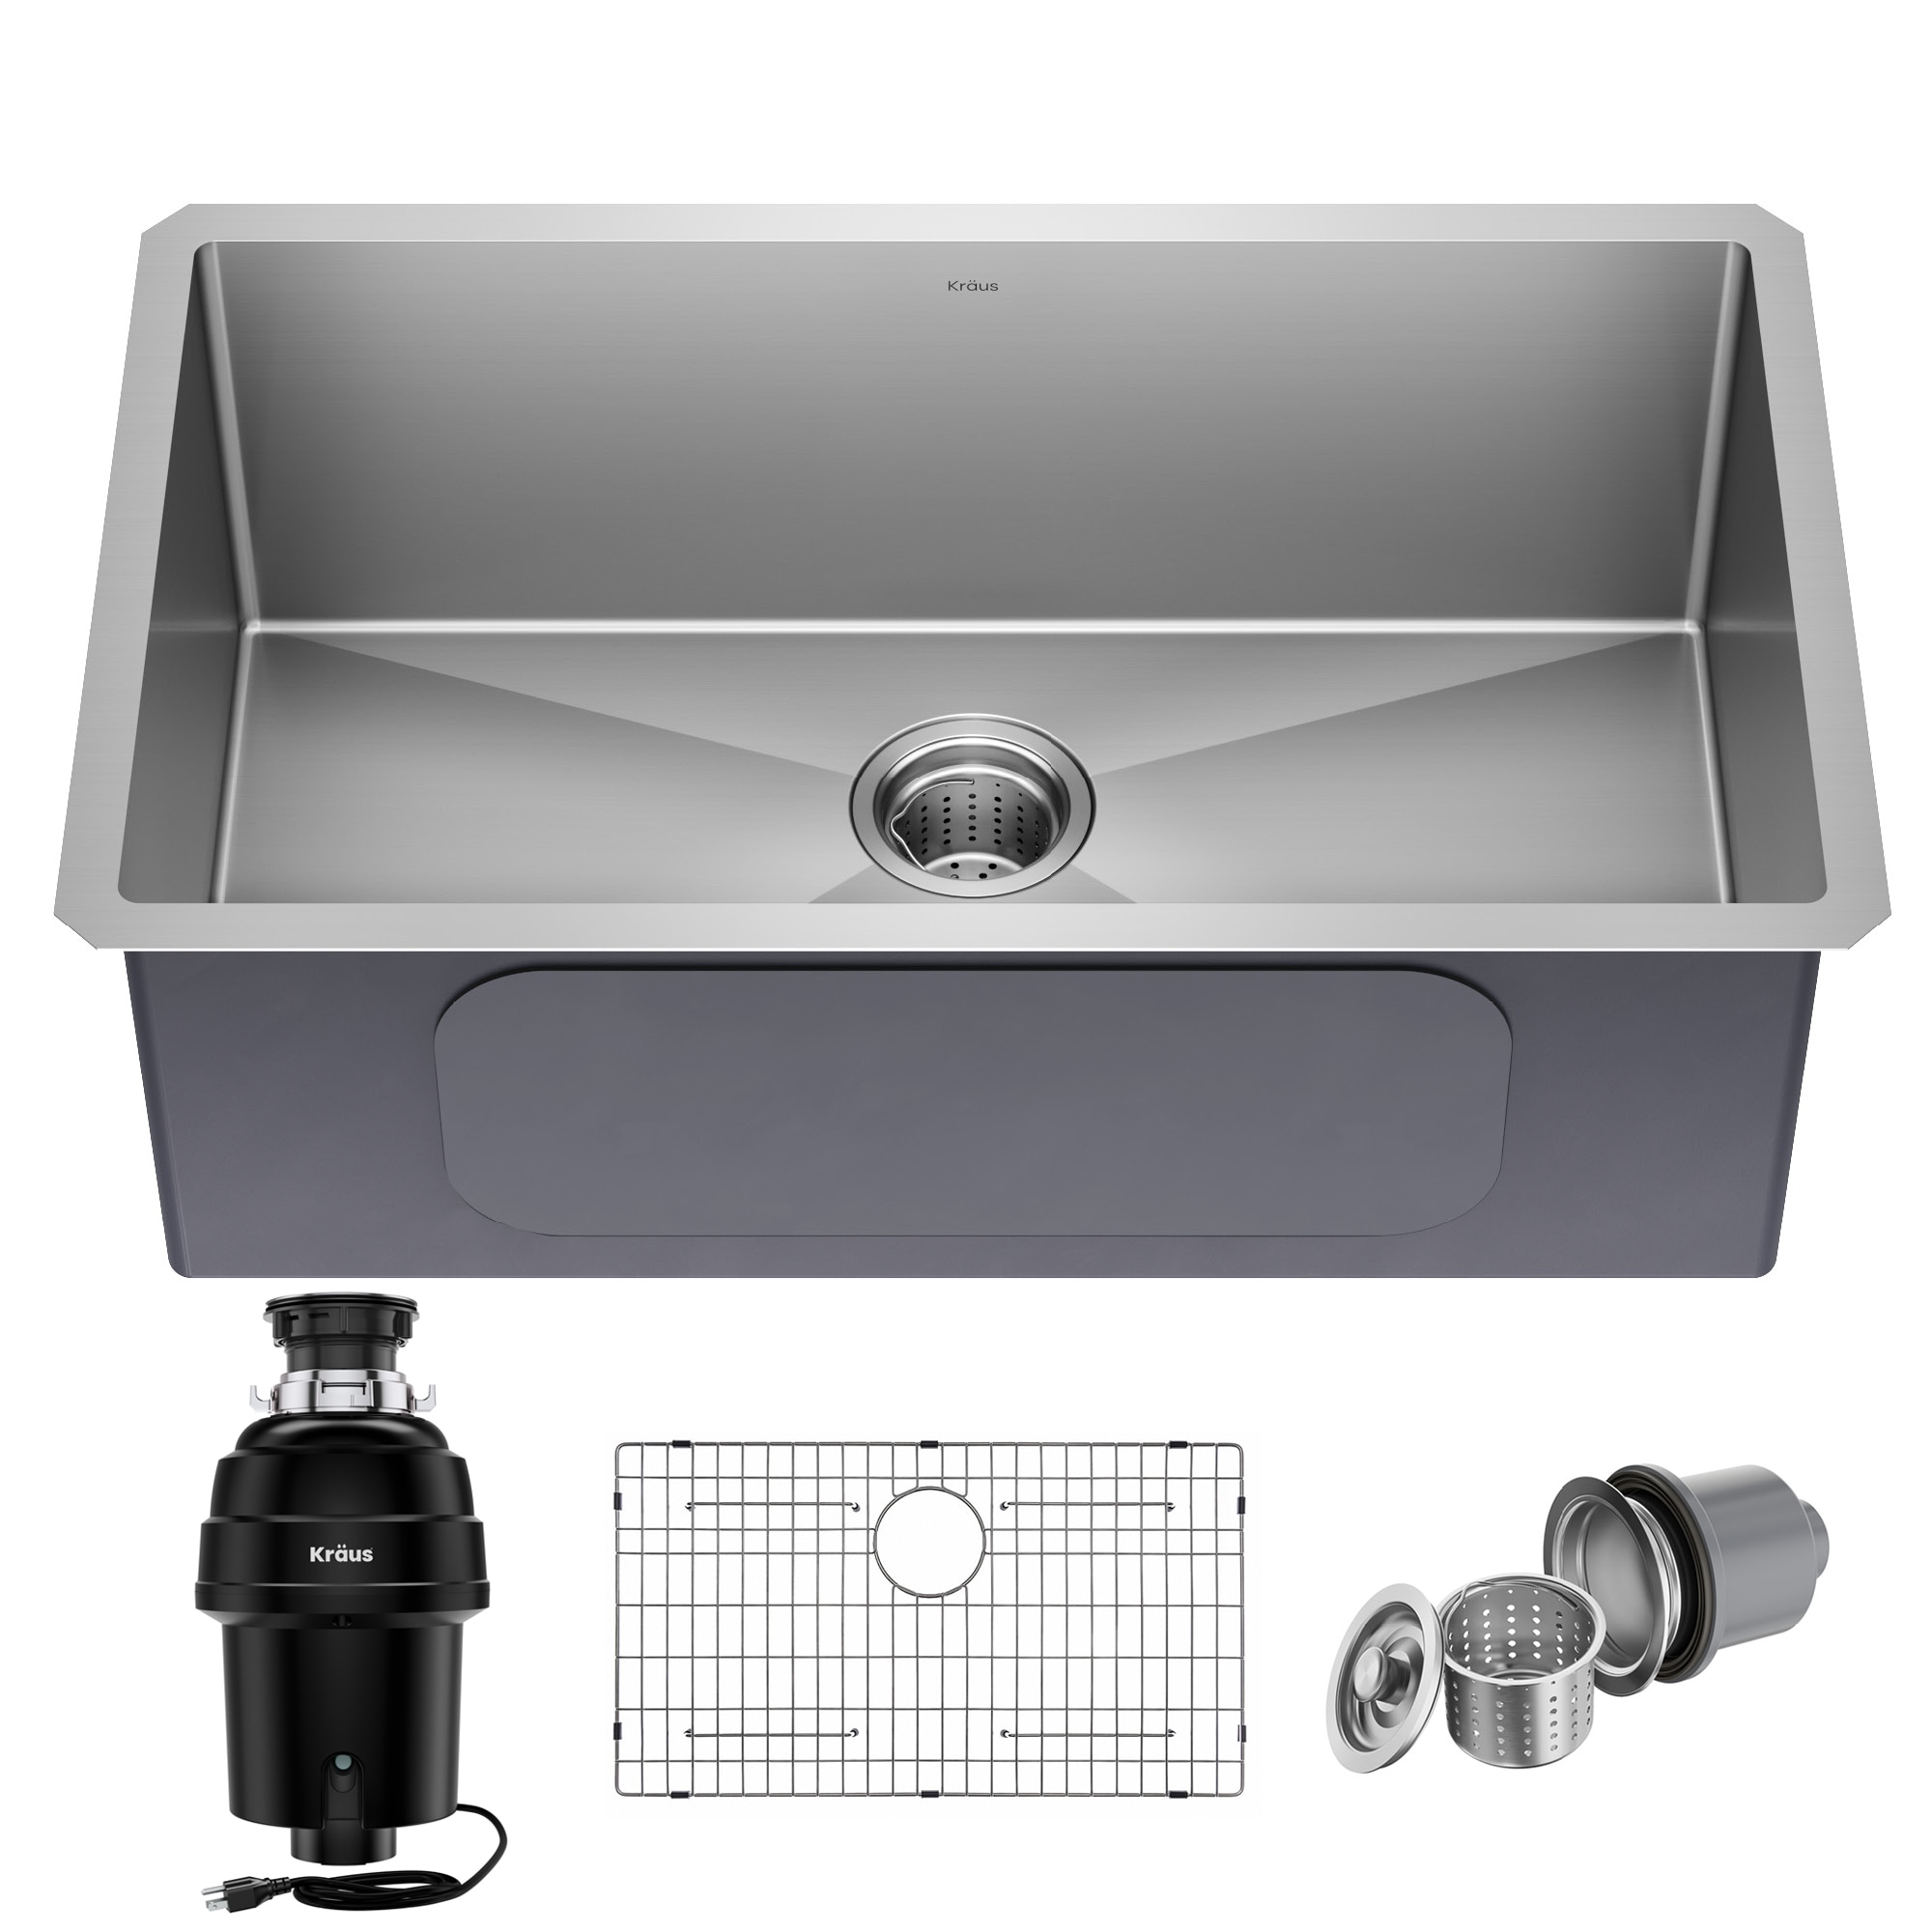 Kraus KDR-3 Workstation Kitchen Sink Dish Drying Rack Drainer & Utensil Holder - Stainless Steel